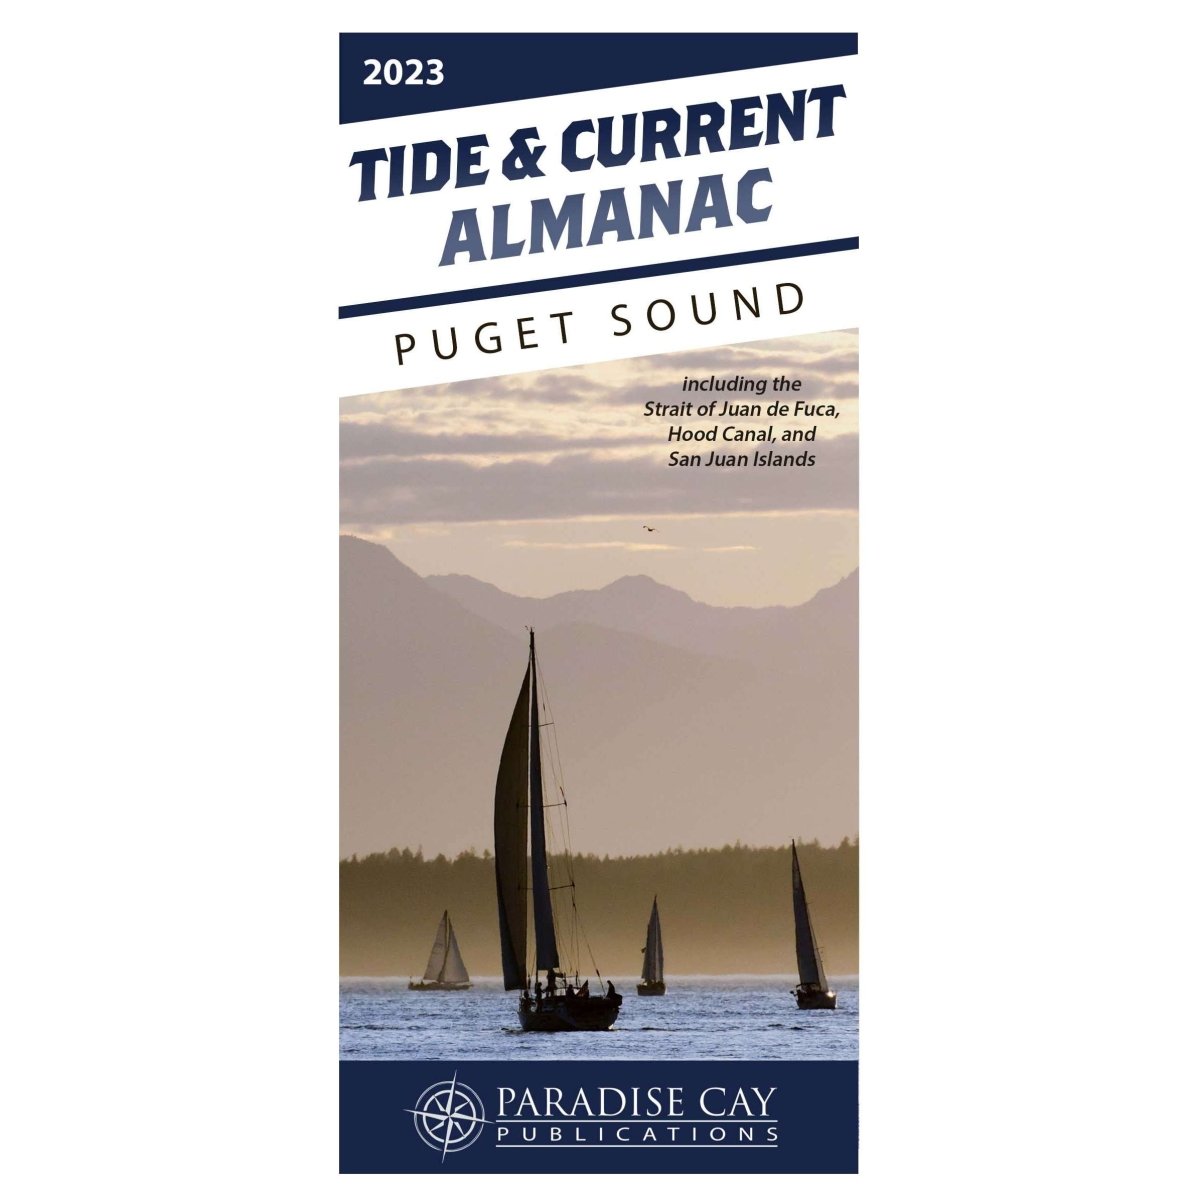 2023 Tide & Current Almanac: Puget Sound - Life Raft Professionals